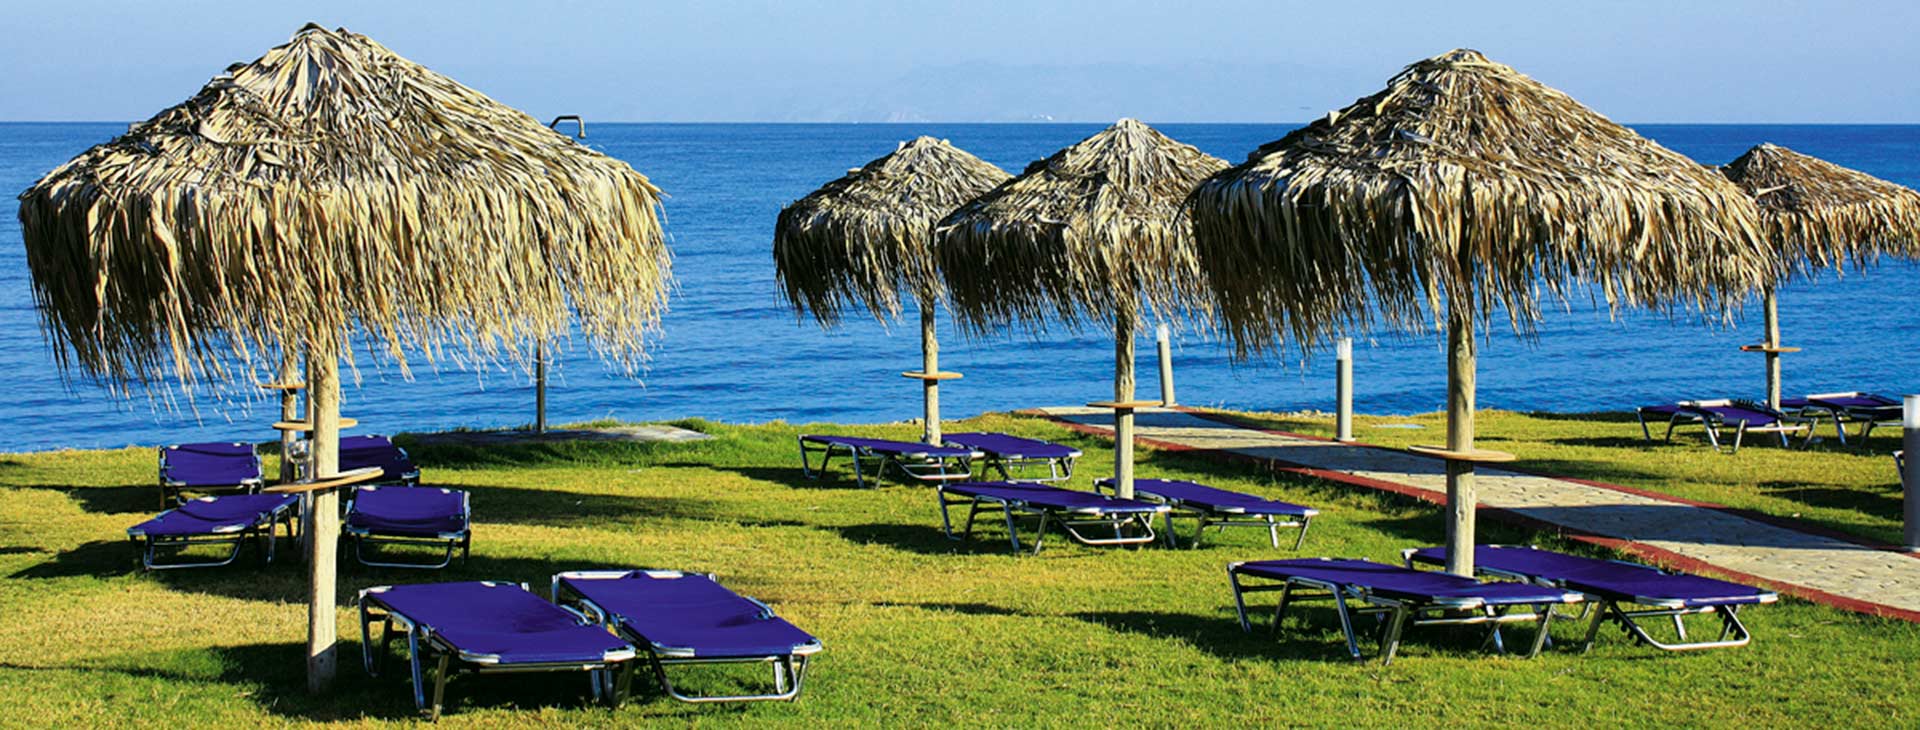 Aegean Breeze Resort